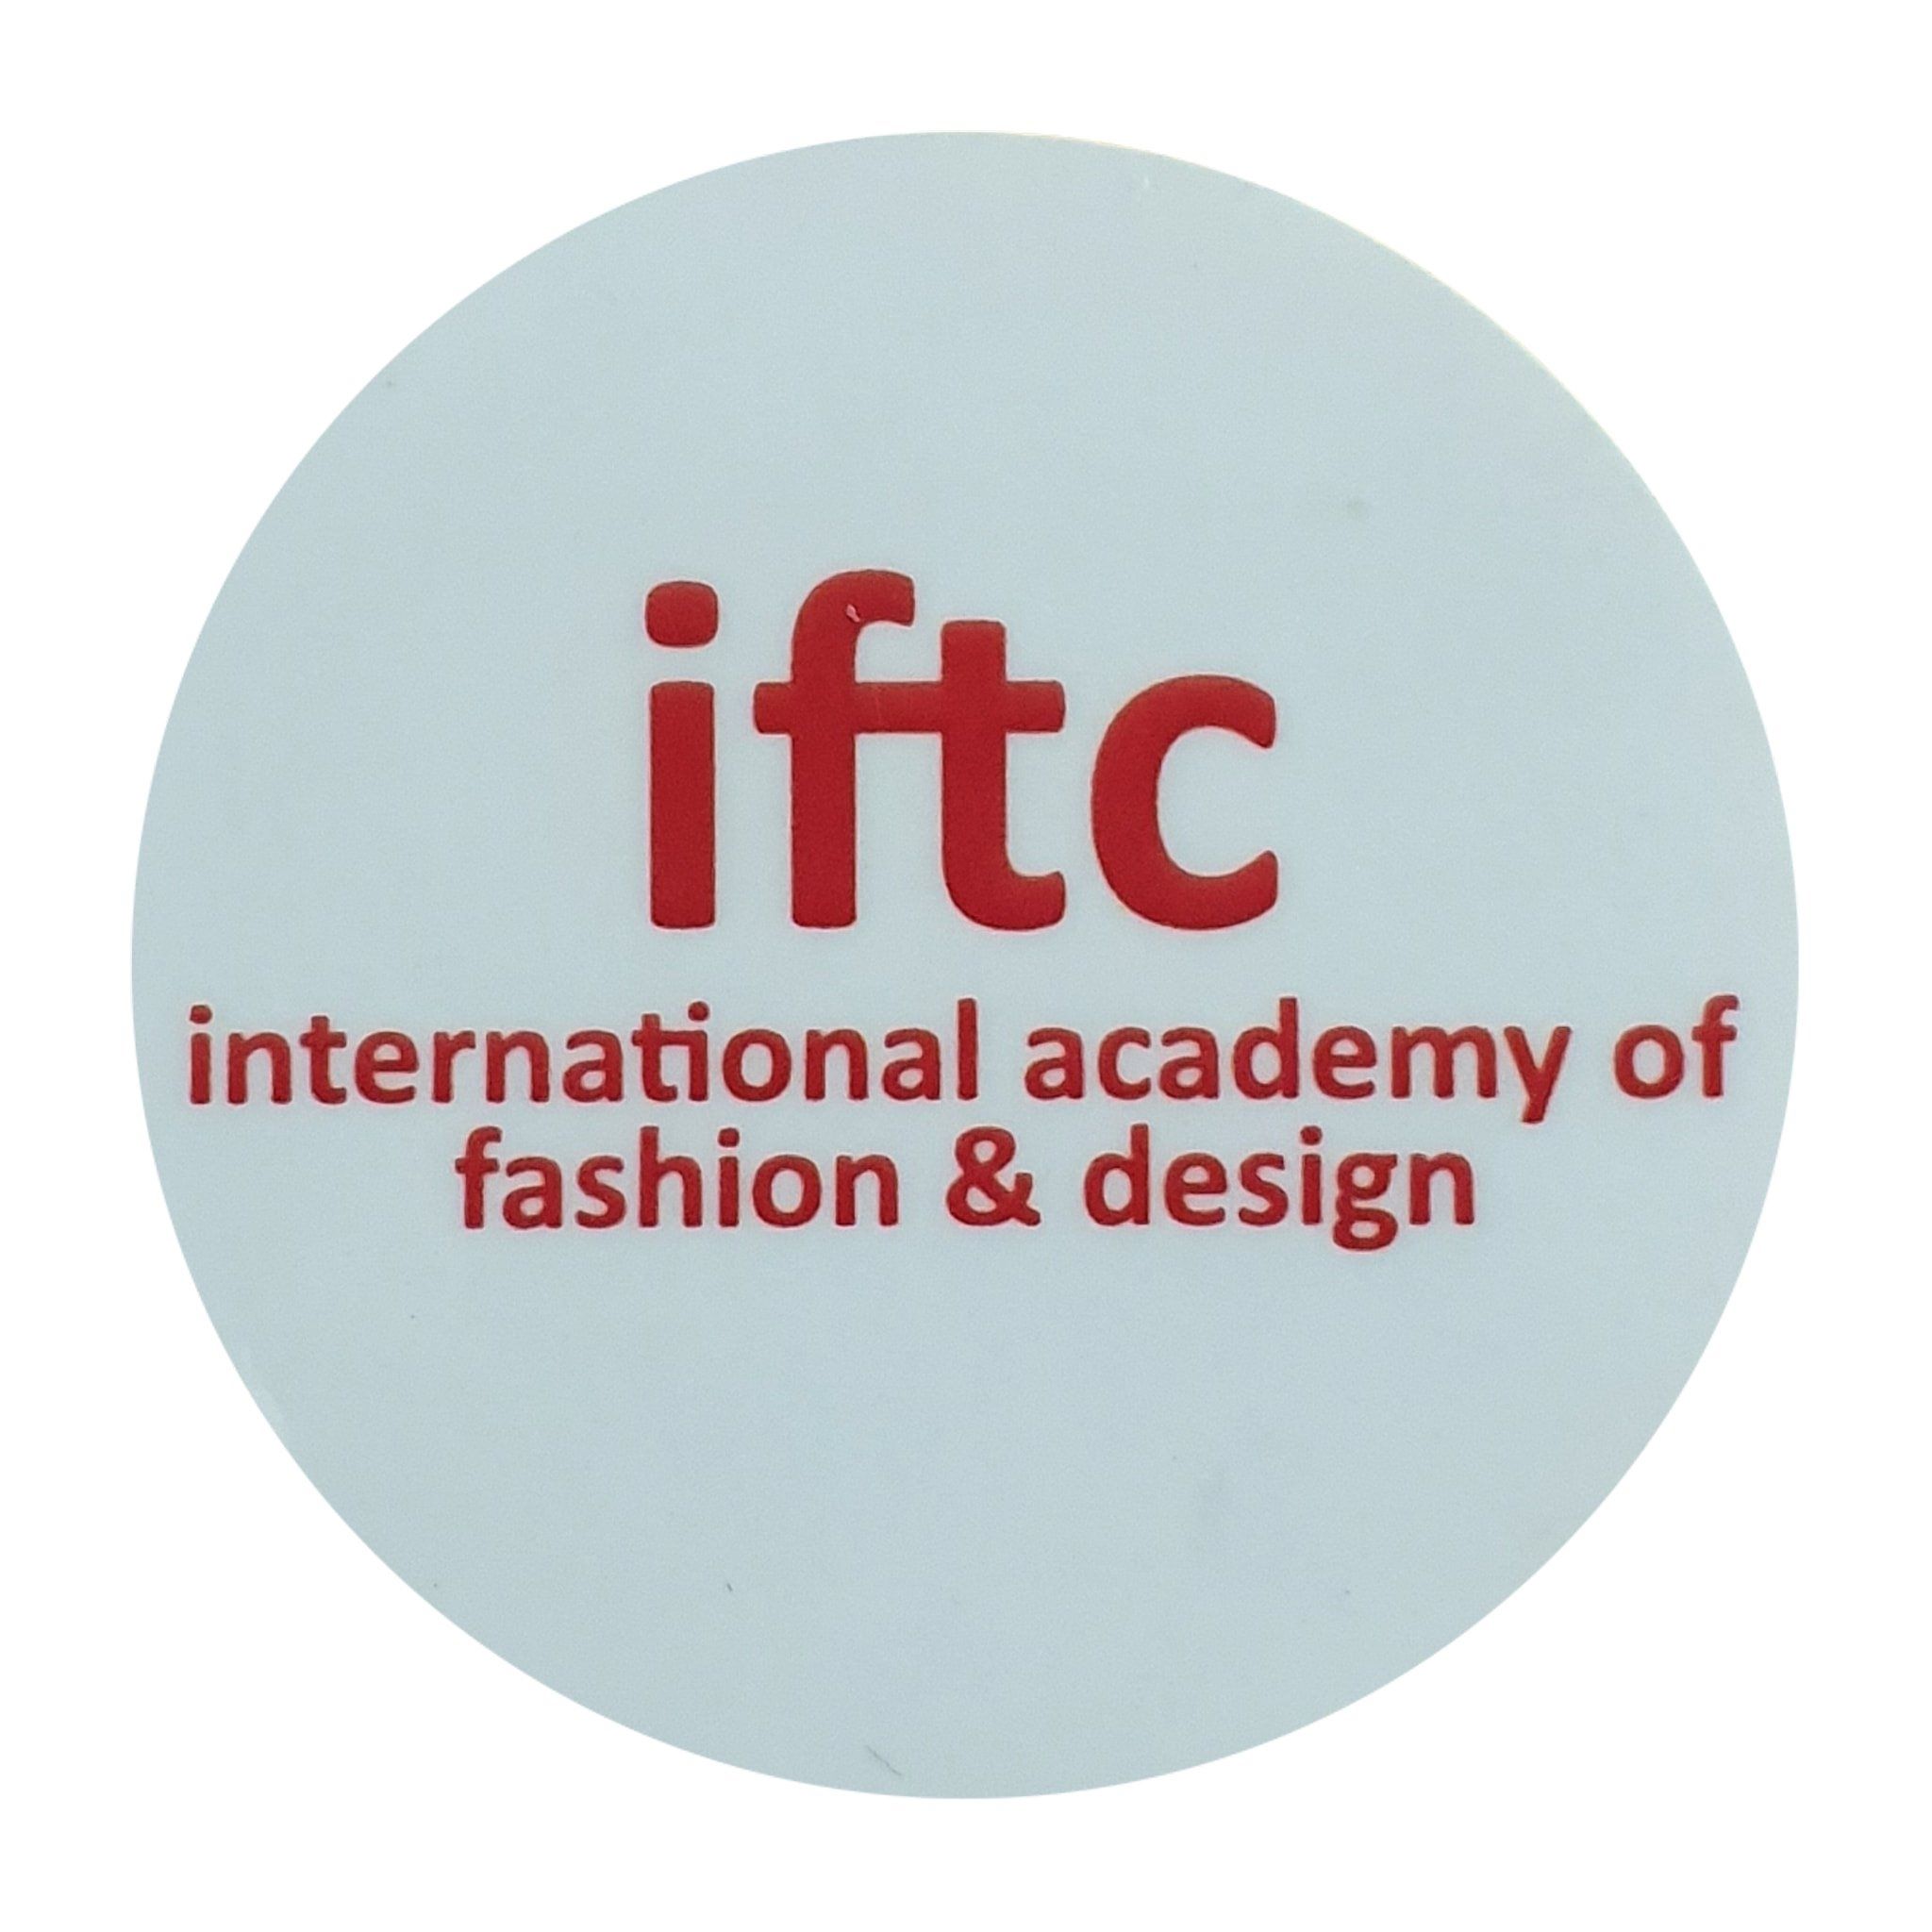 IFTC international academy of fashion & design Logo